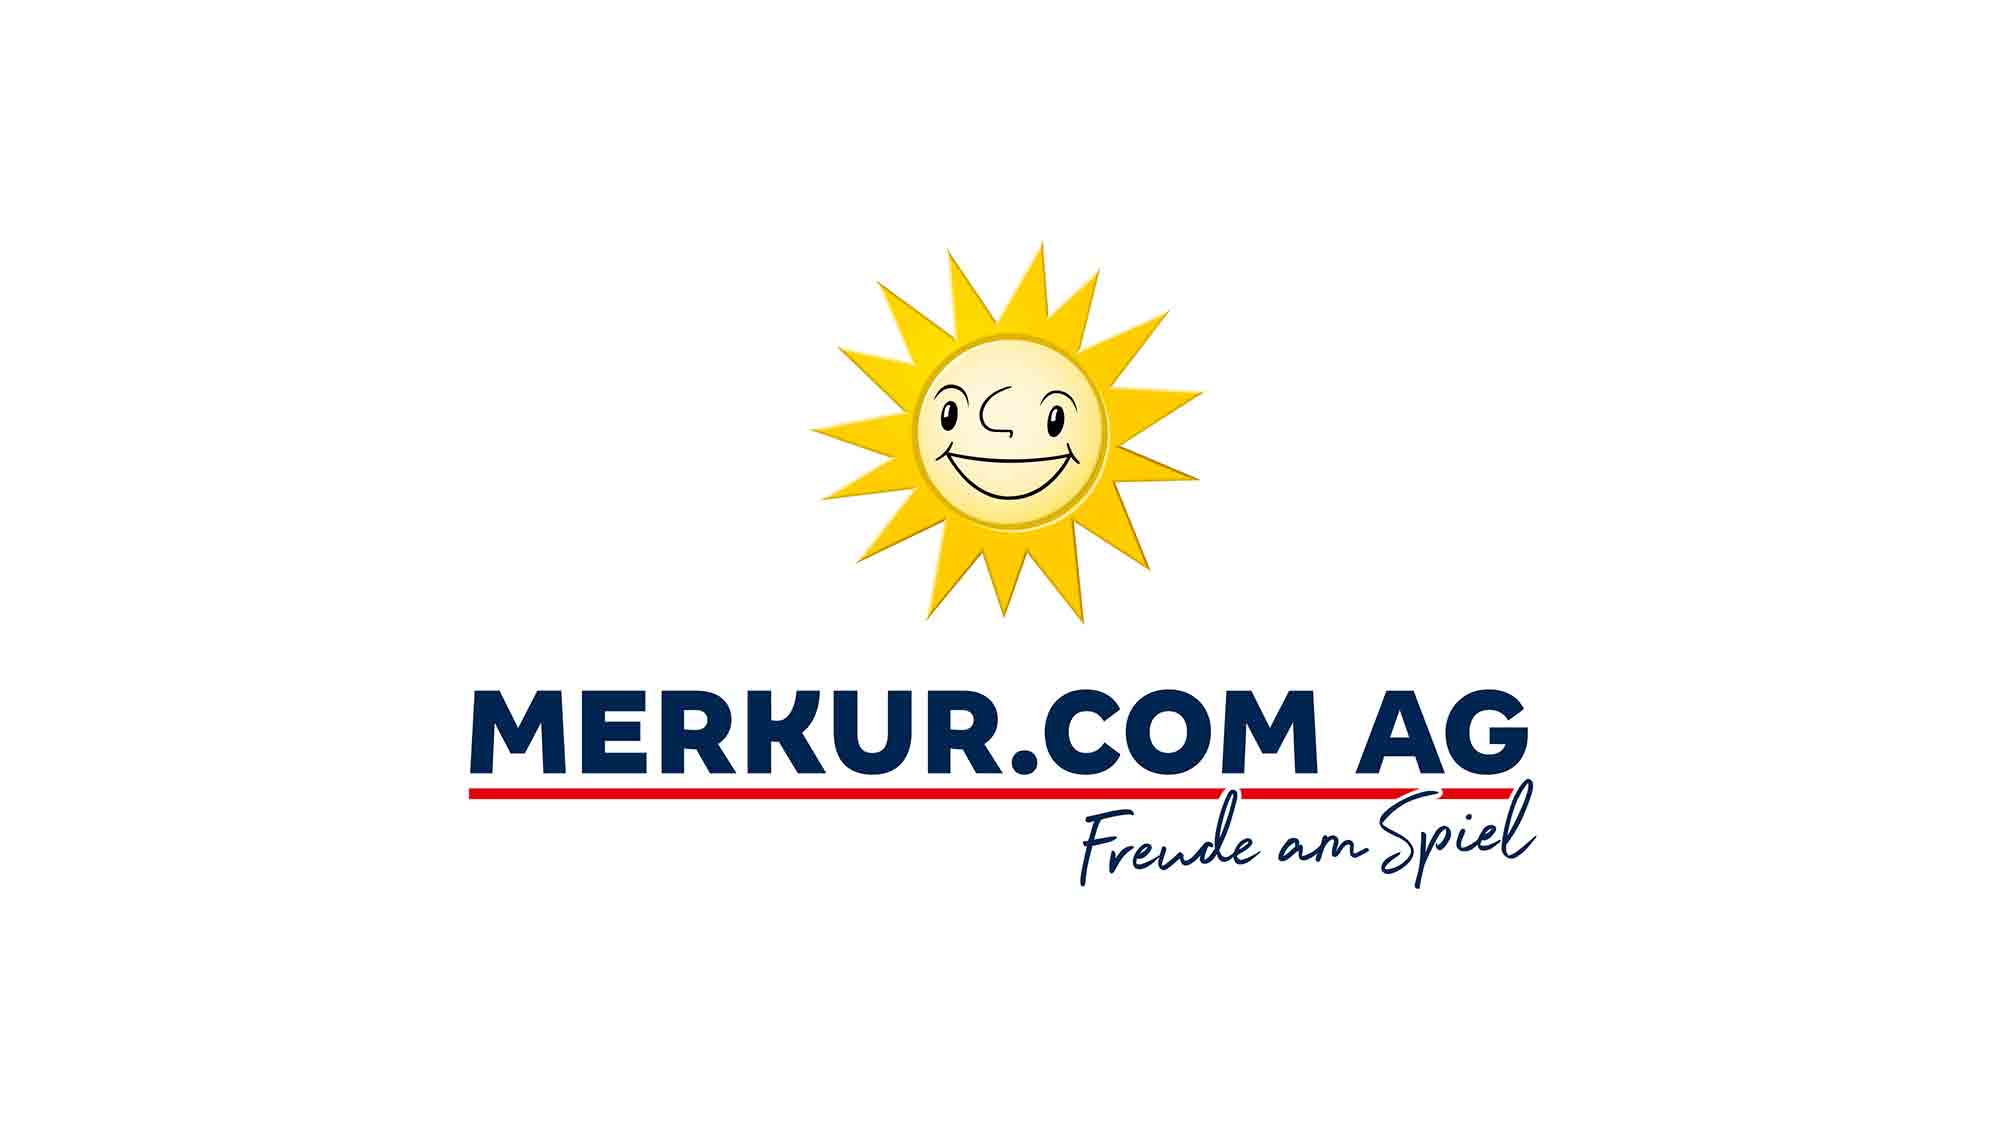 Aus der Gauselmann AG wird die Merkur.com AG